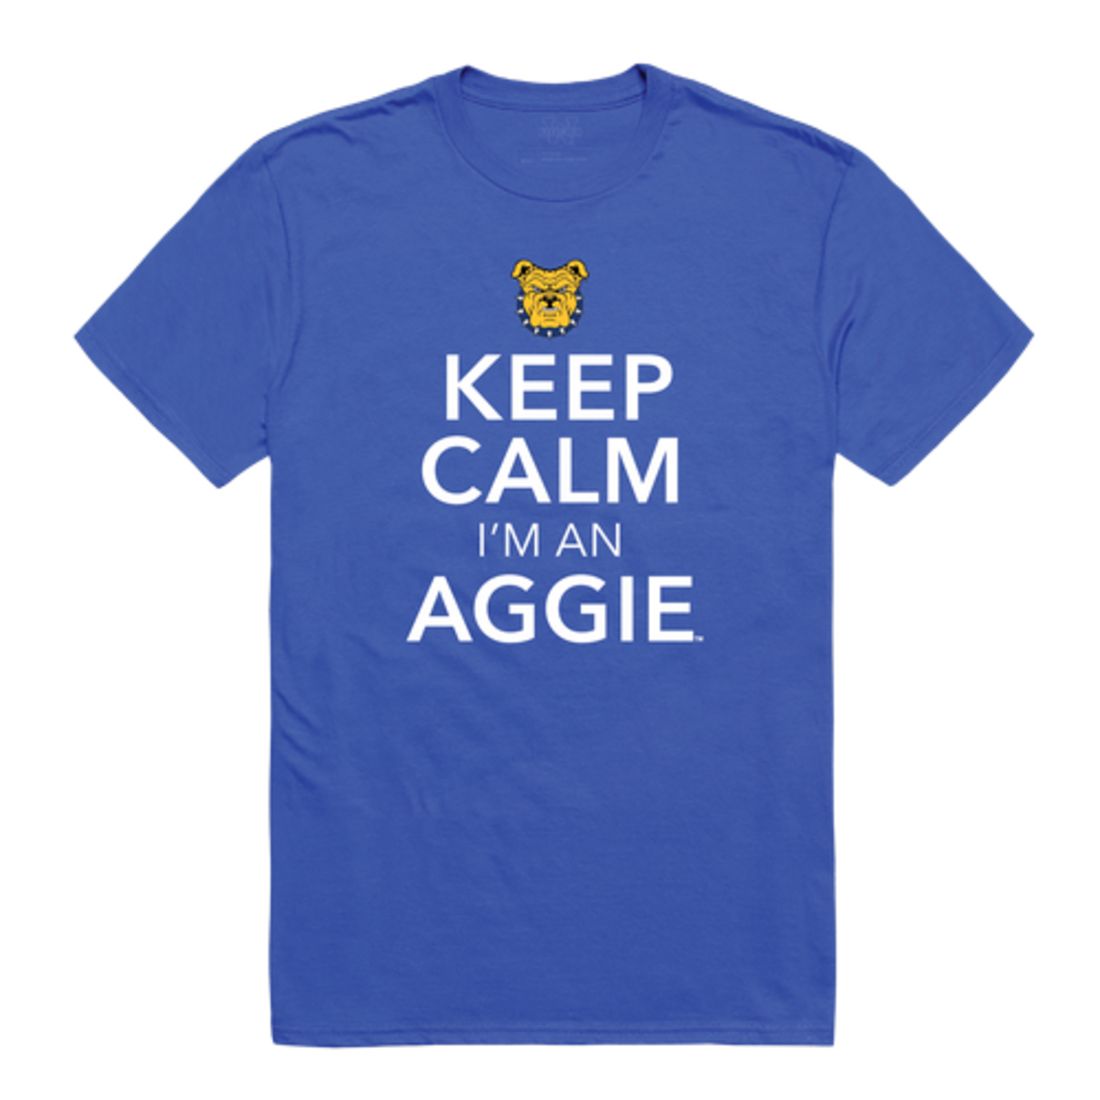 Keep Calm I'm From North Carolina A&T State University Aggies T-Shirt Tee